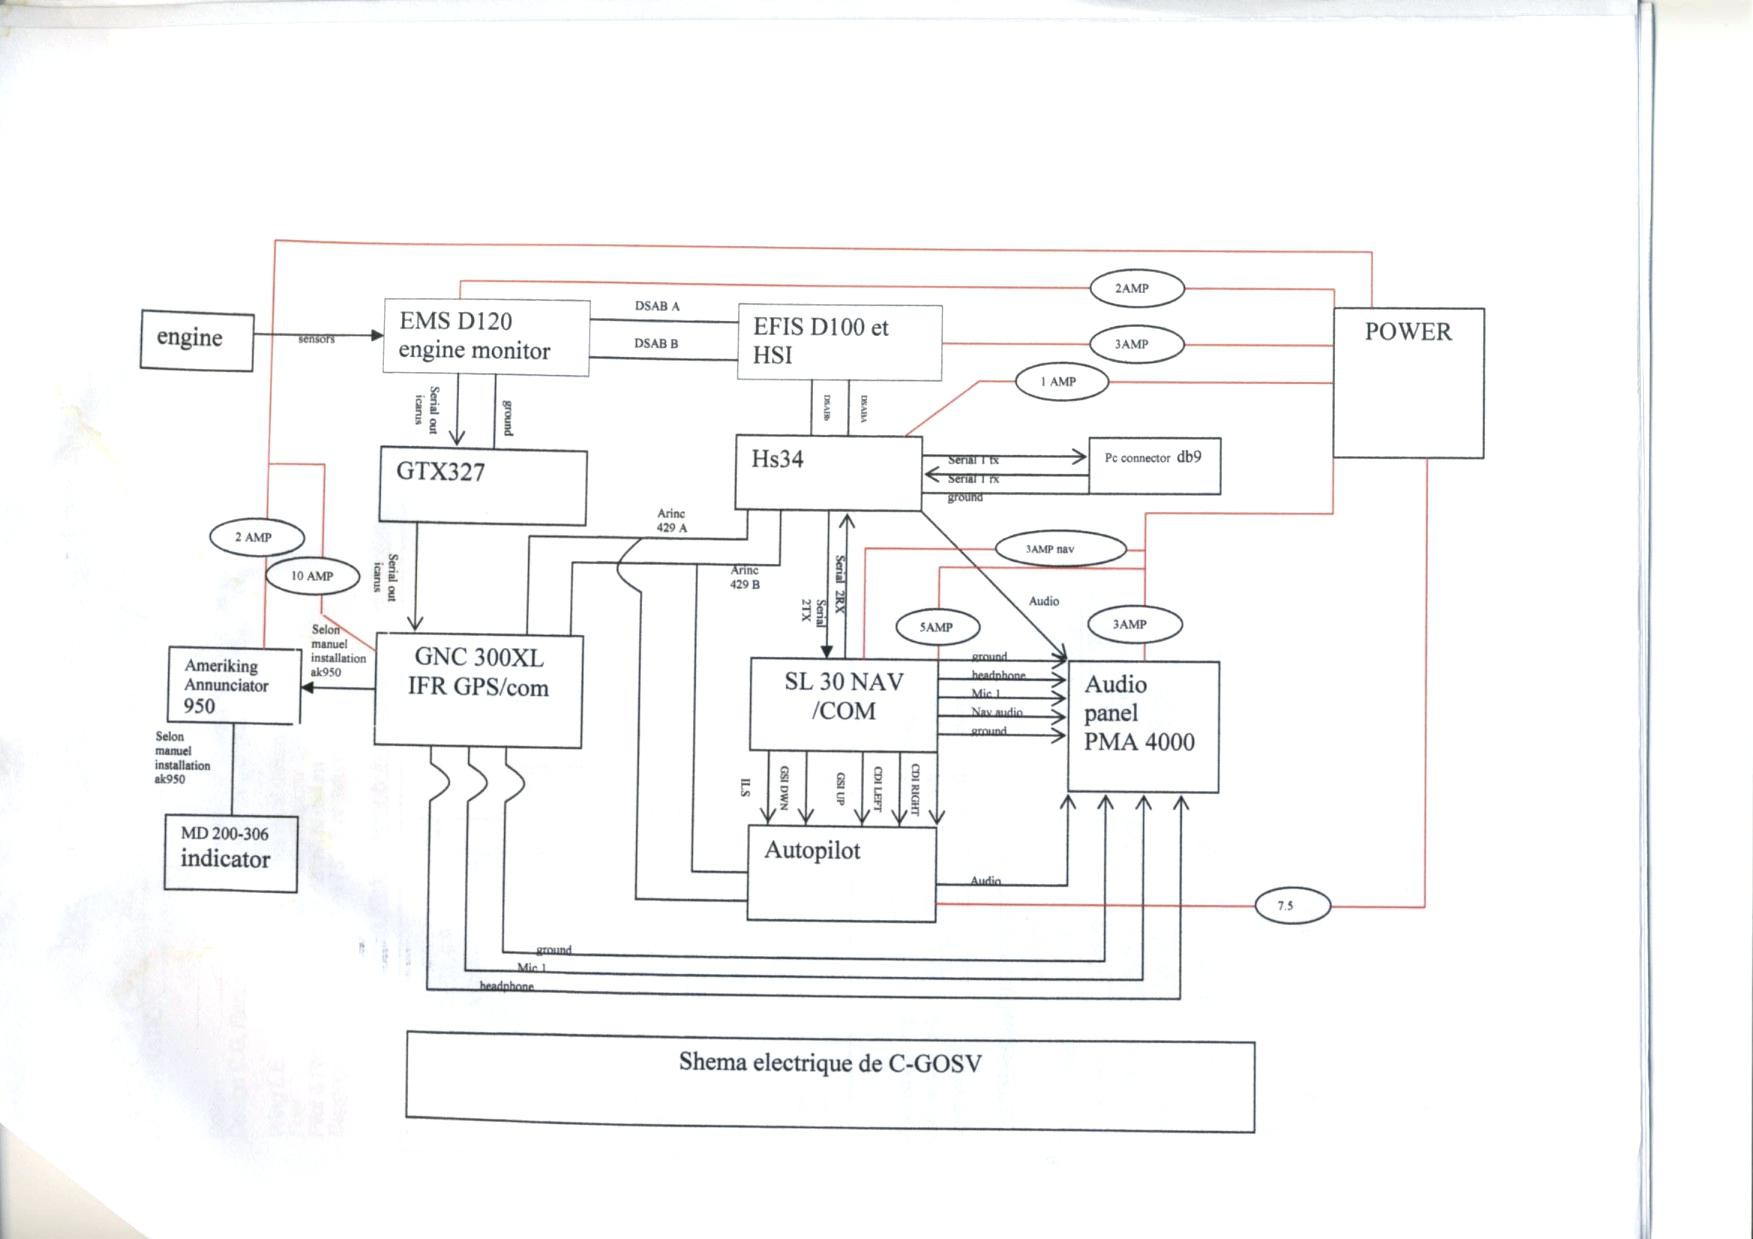 Garmin Transducer Wiring Diagram Garmin Gps Wiring Diagram Power Connection with Blueprint Of Garmin Transducer Wiring Diagram